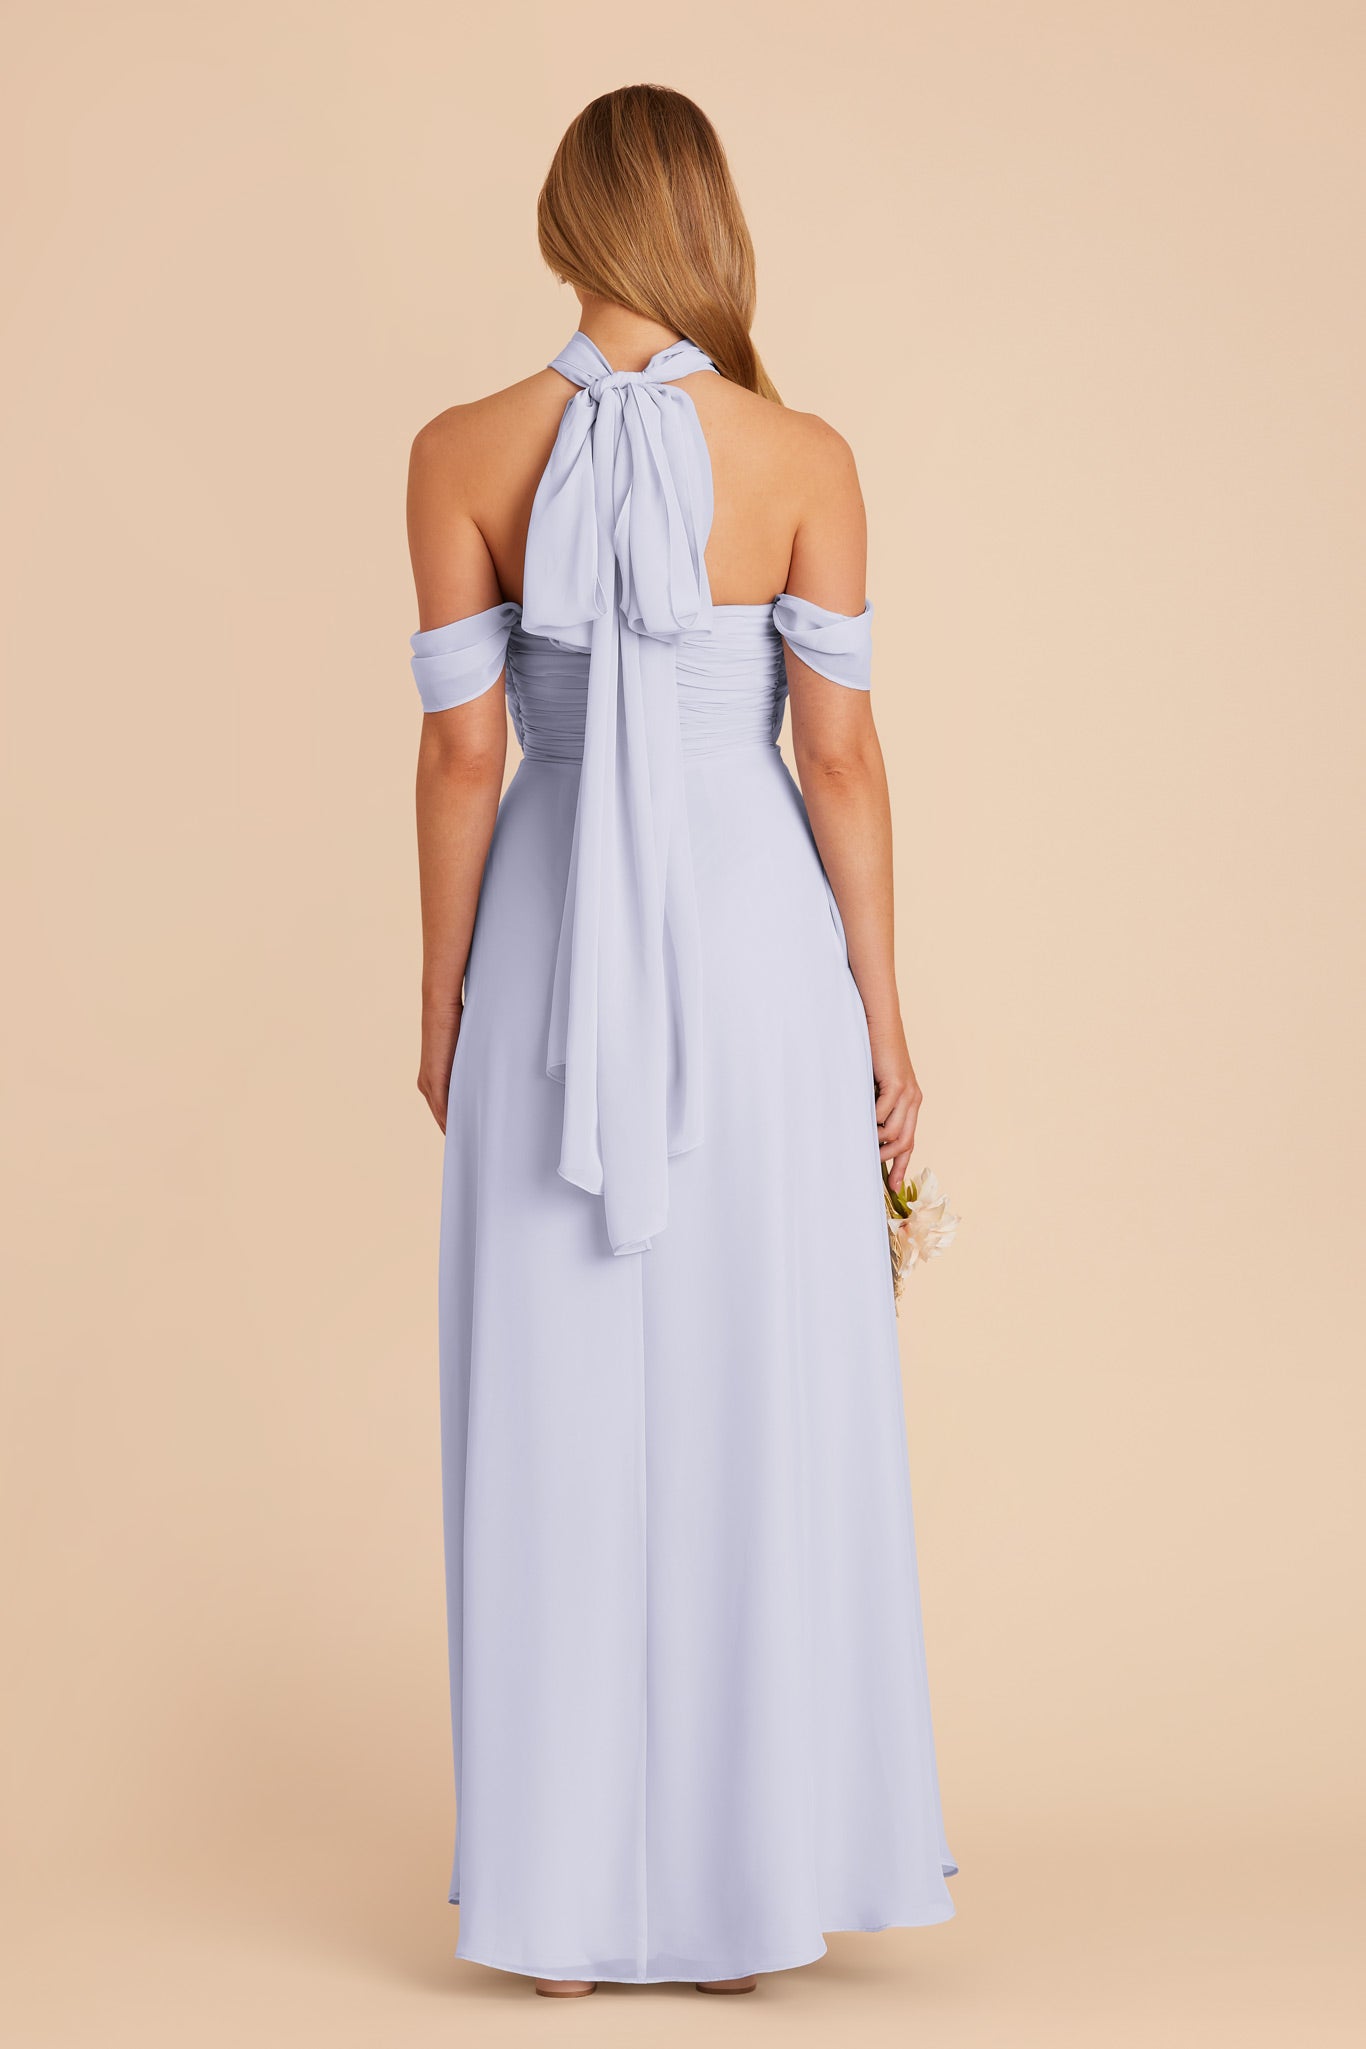 Periwinkle Blue Cara Chiffon Dress by Birdy Grey